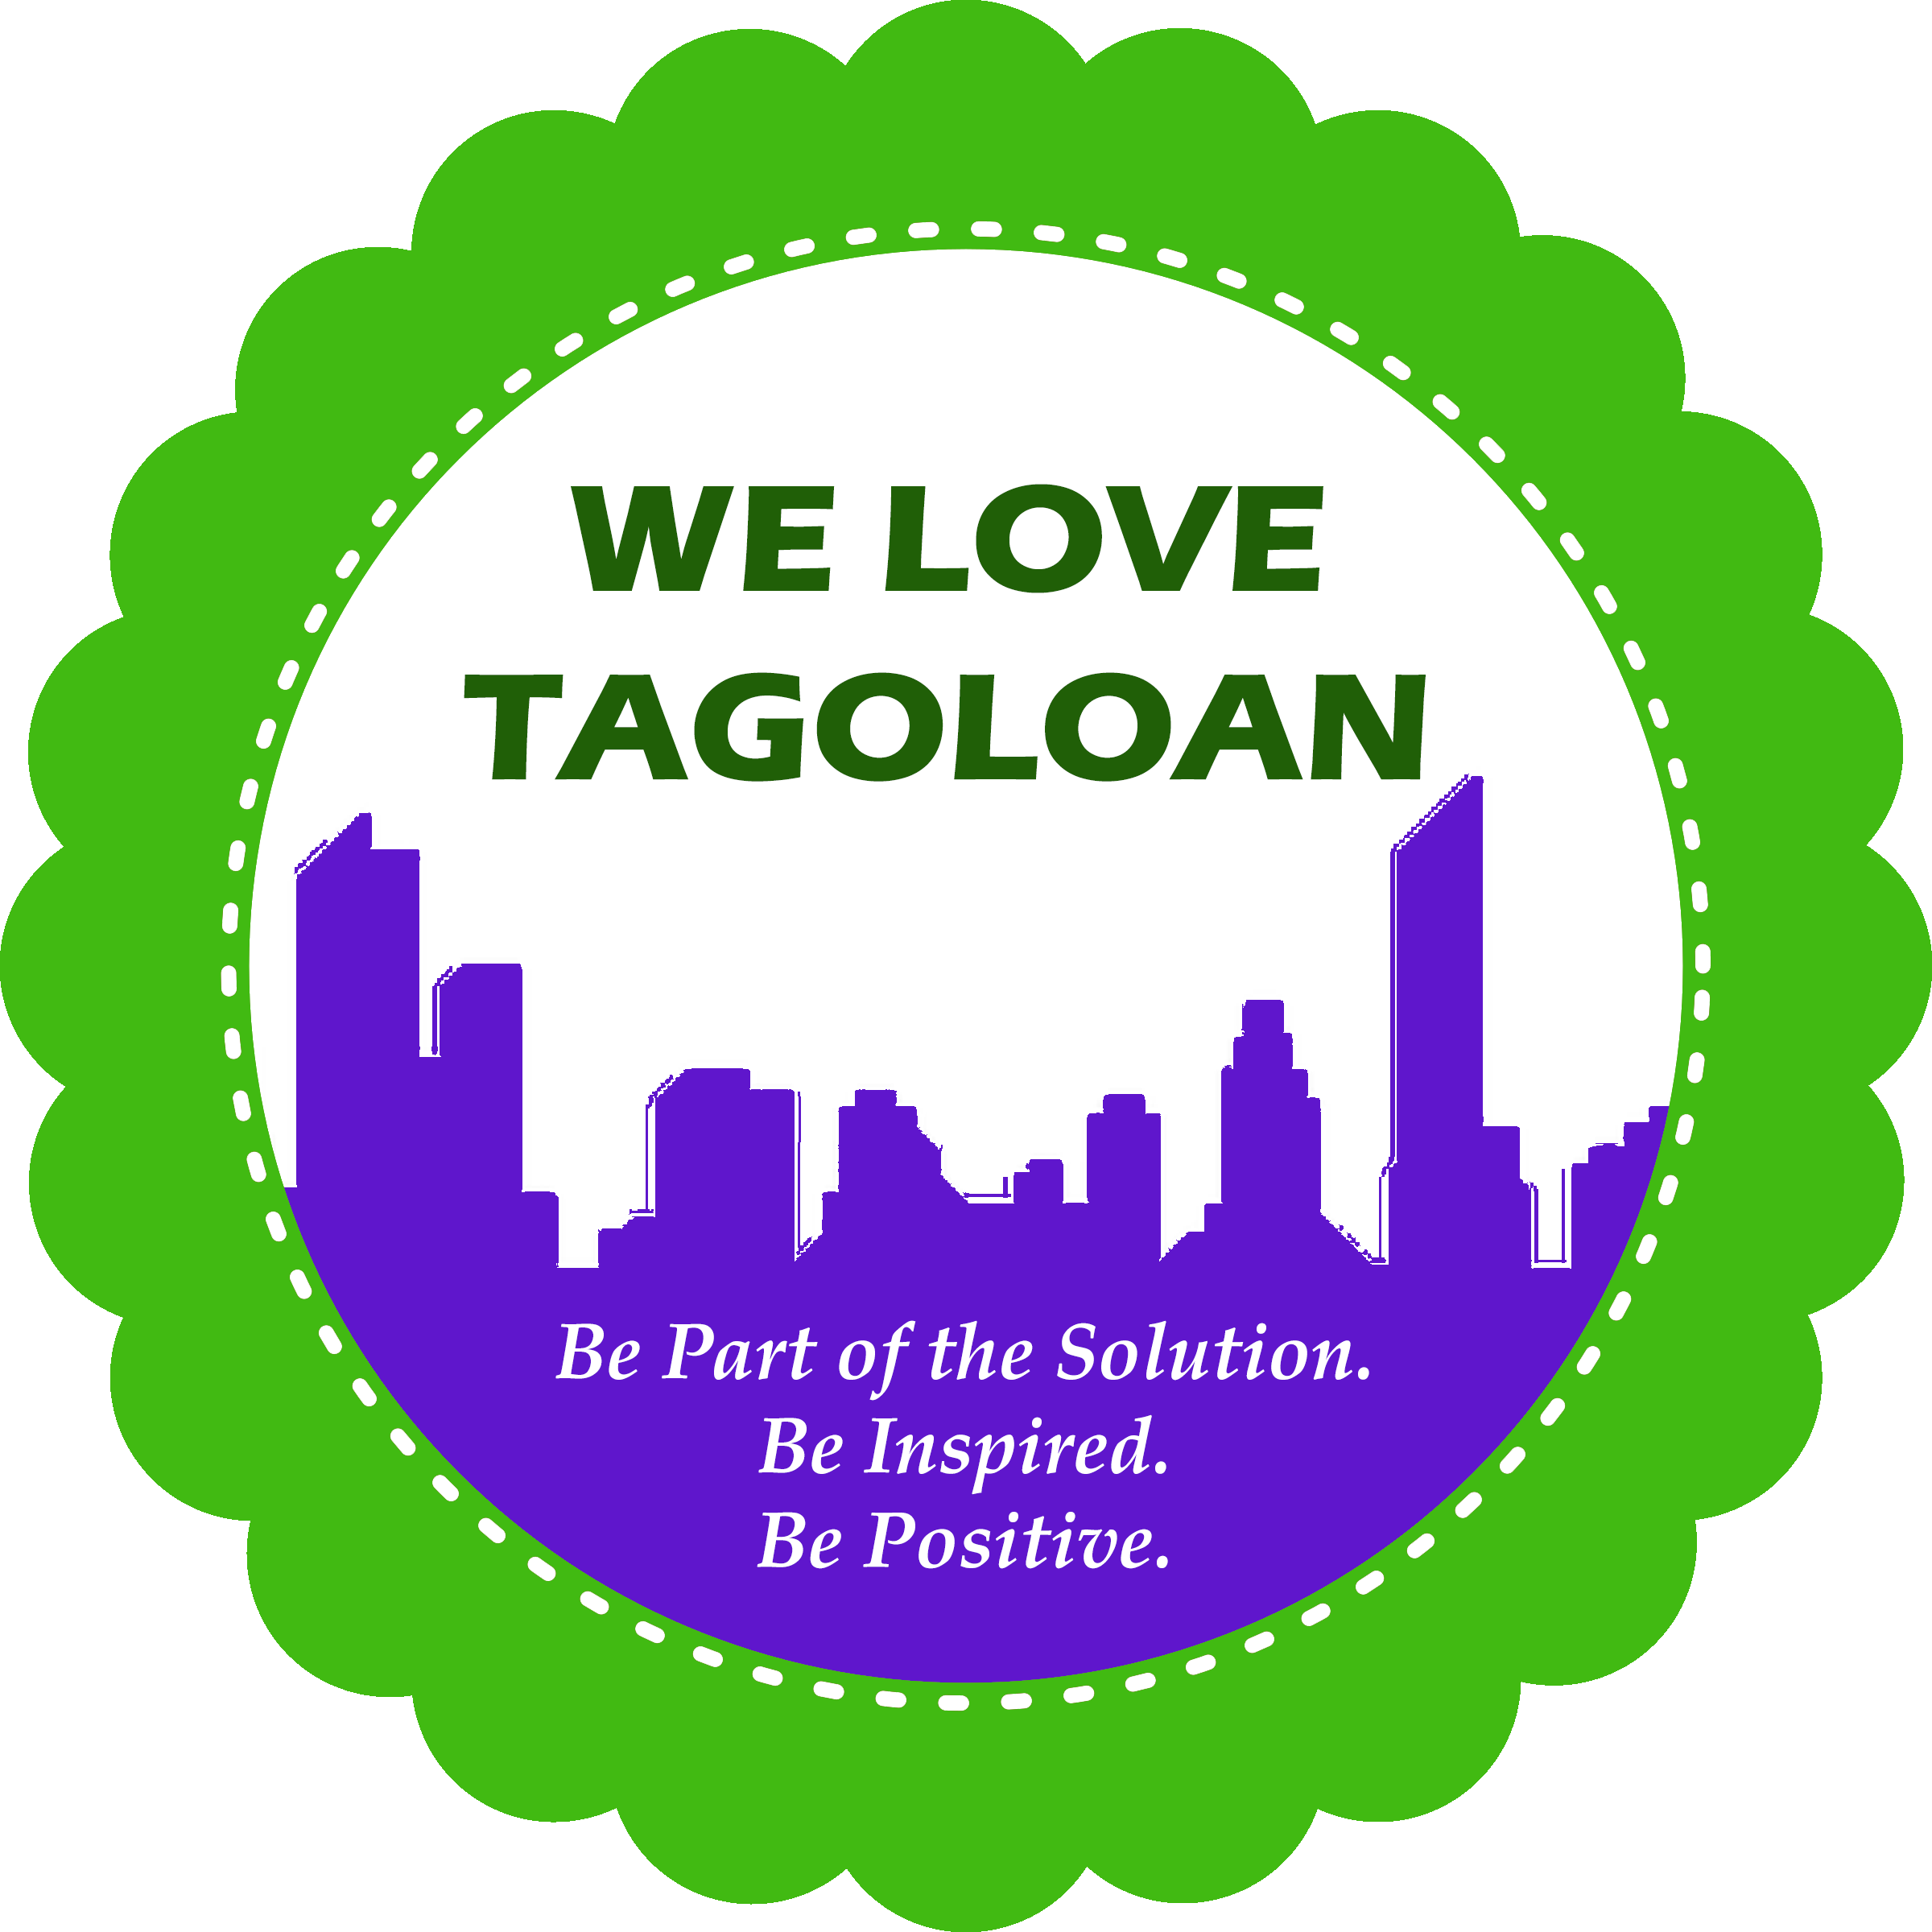 "We Love Tagoloan"